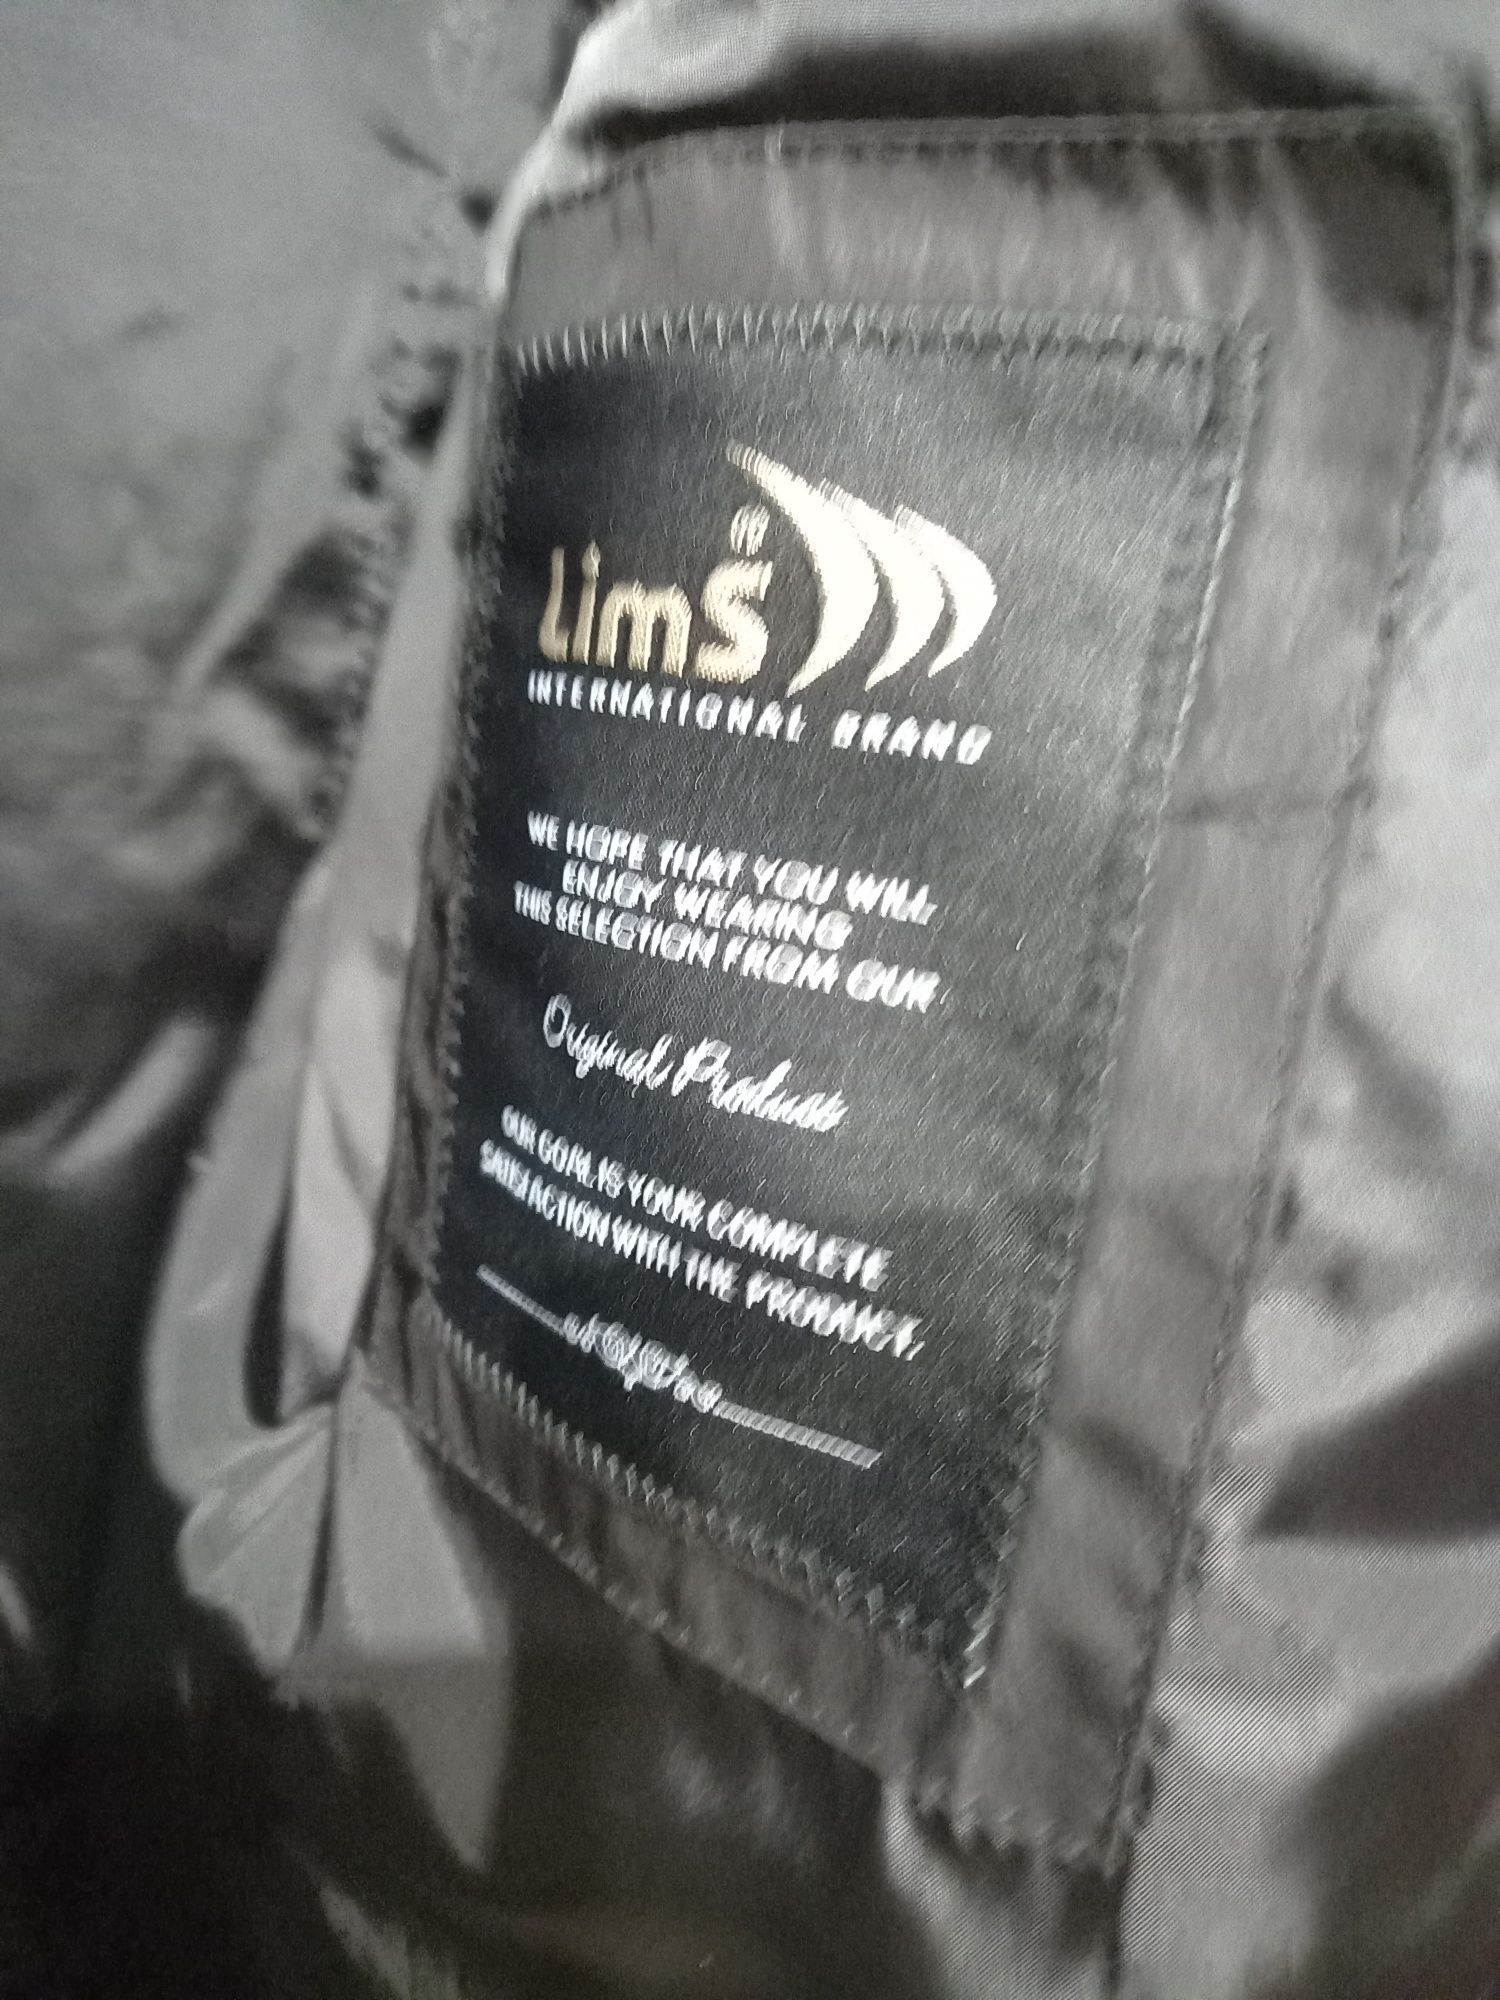 Пальто "LIMS" жіноче б/в зимове